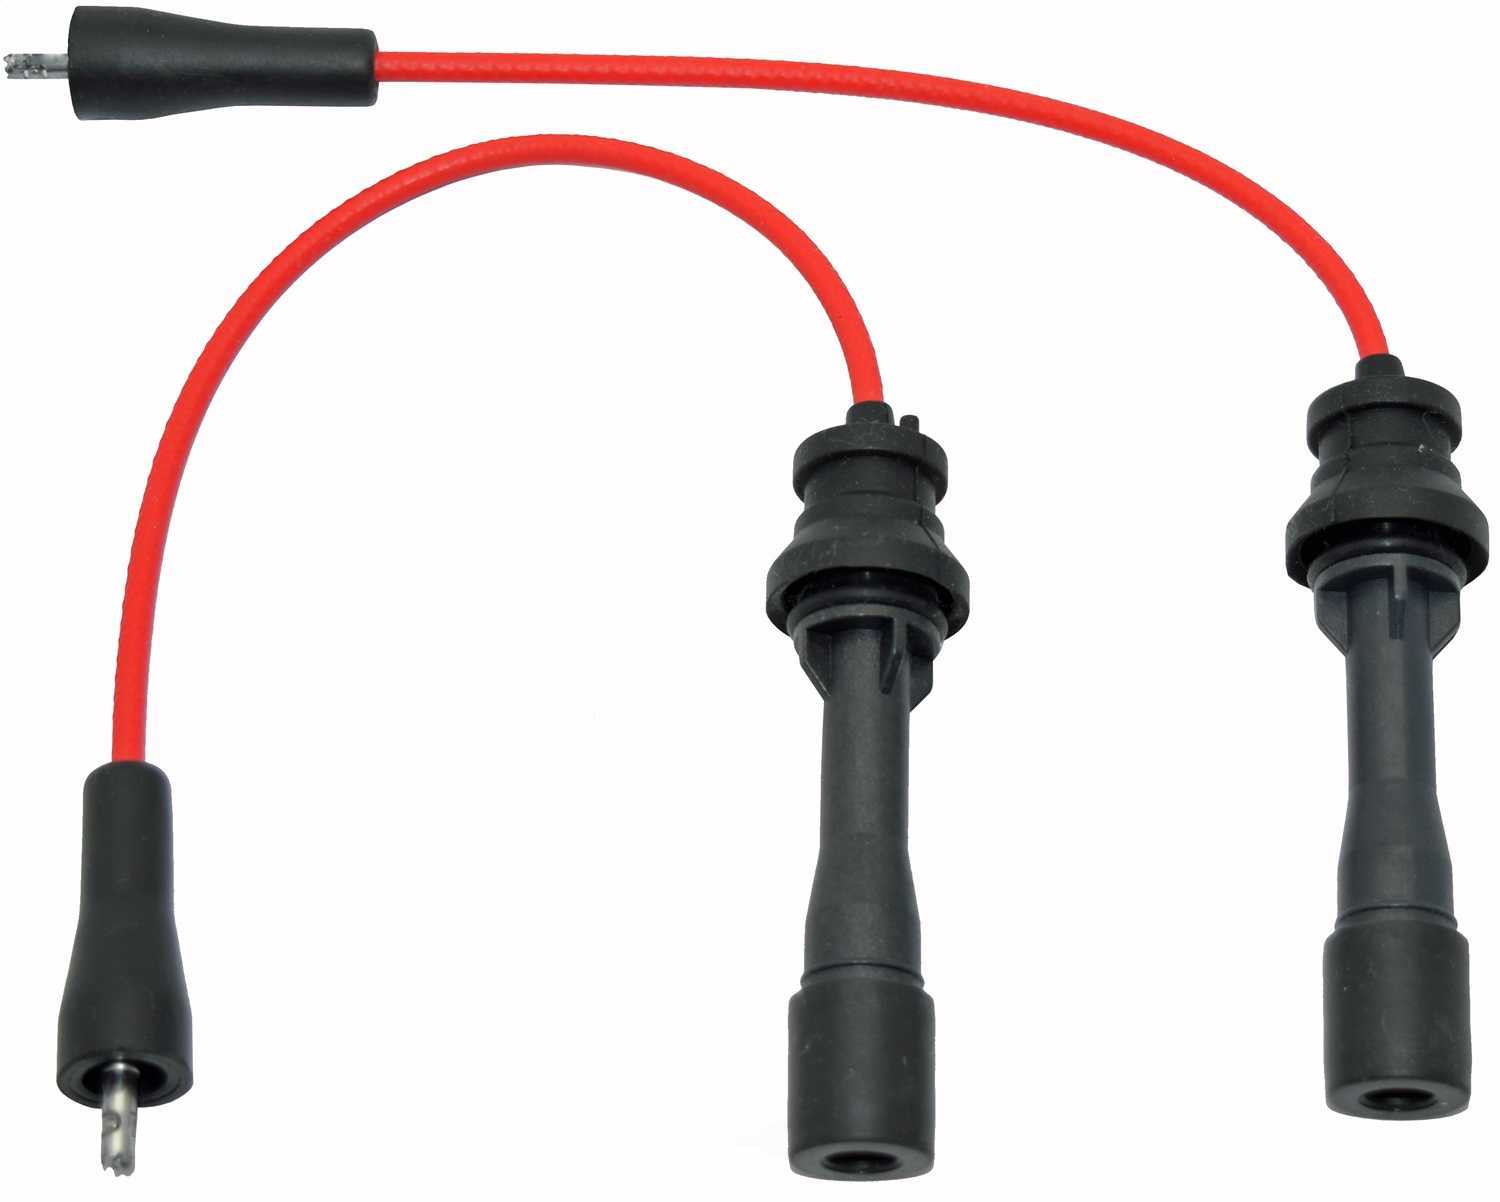 KARLYN/STI - Karlyn-STI Spark Plug Wire Set - KLY 729